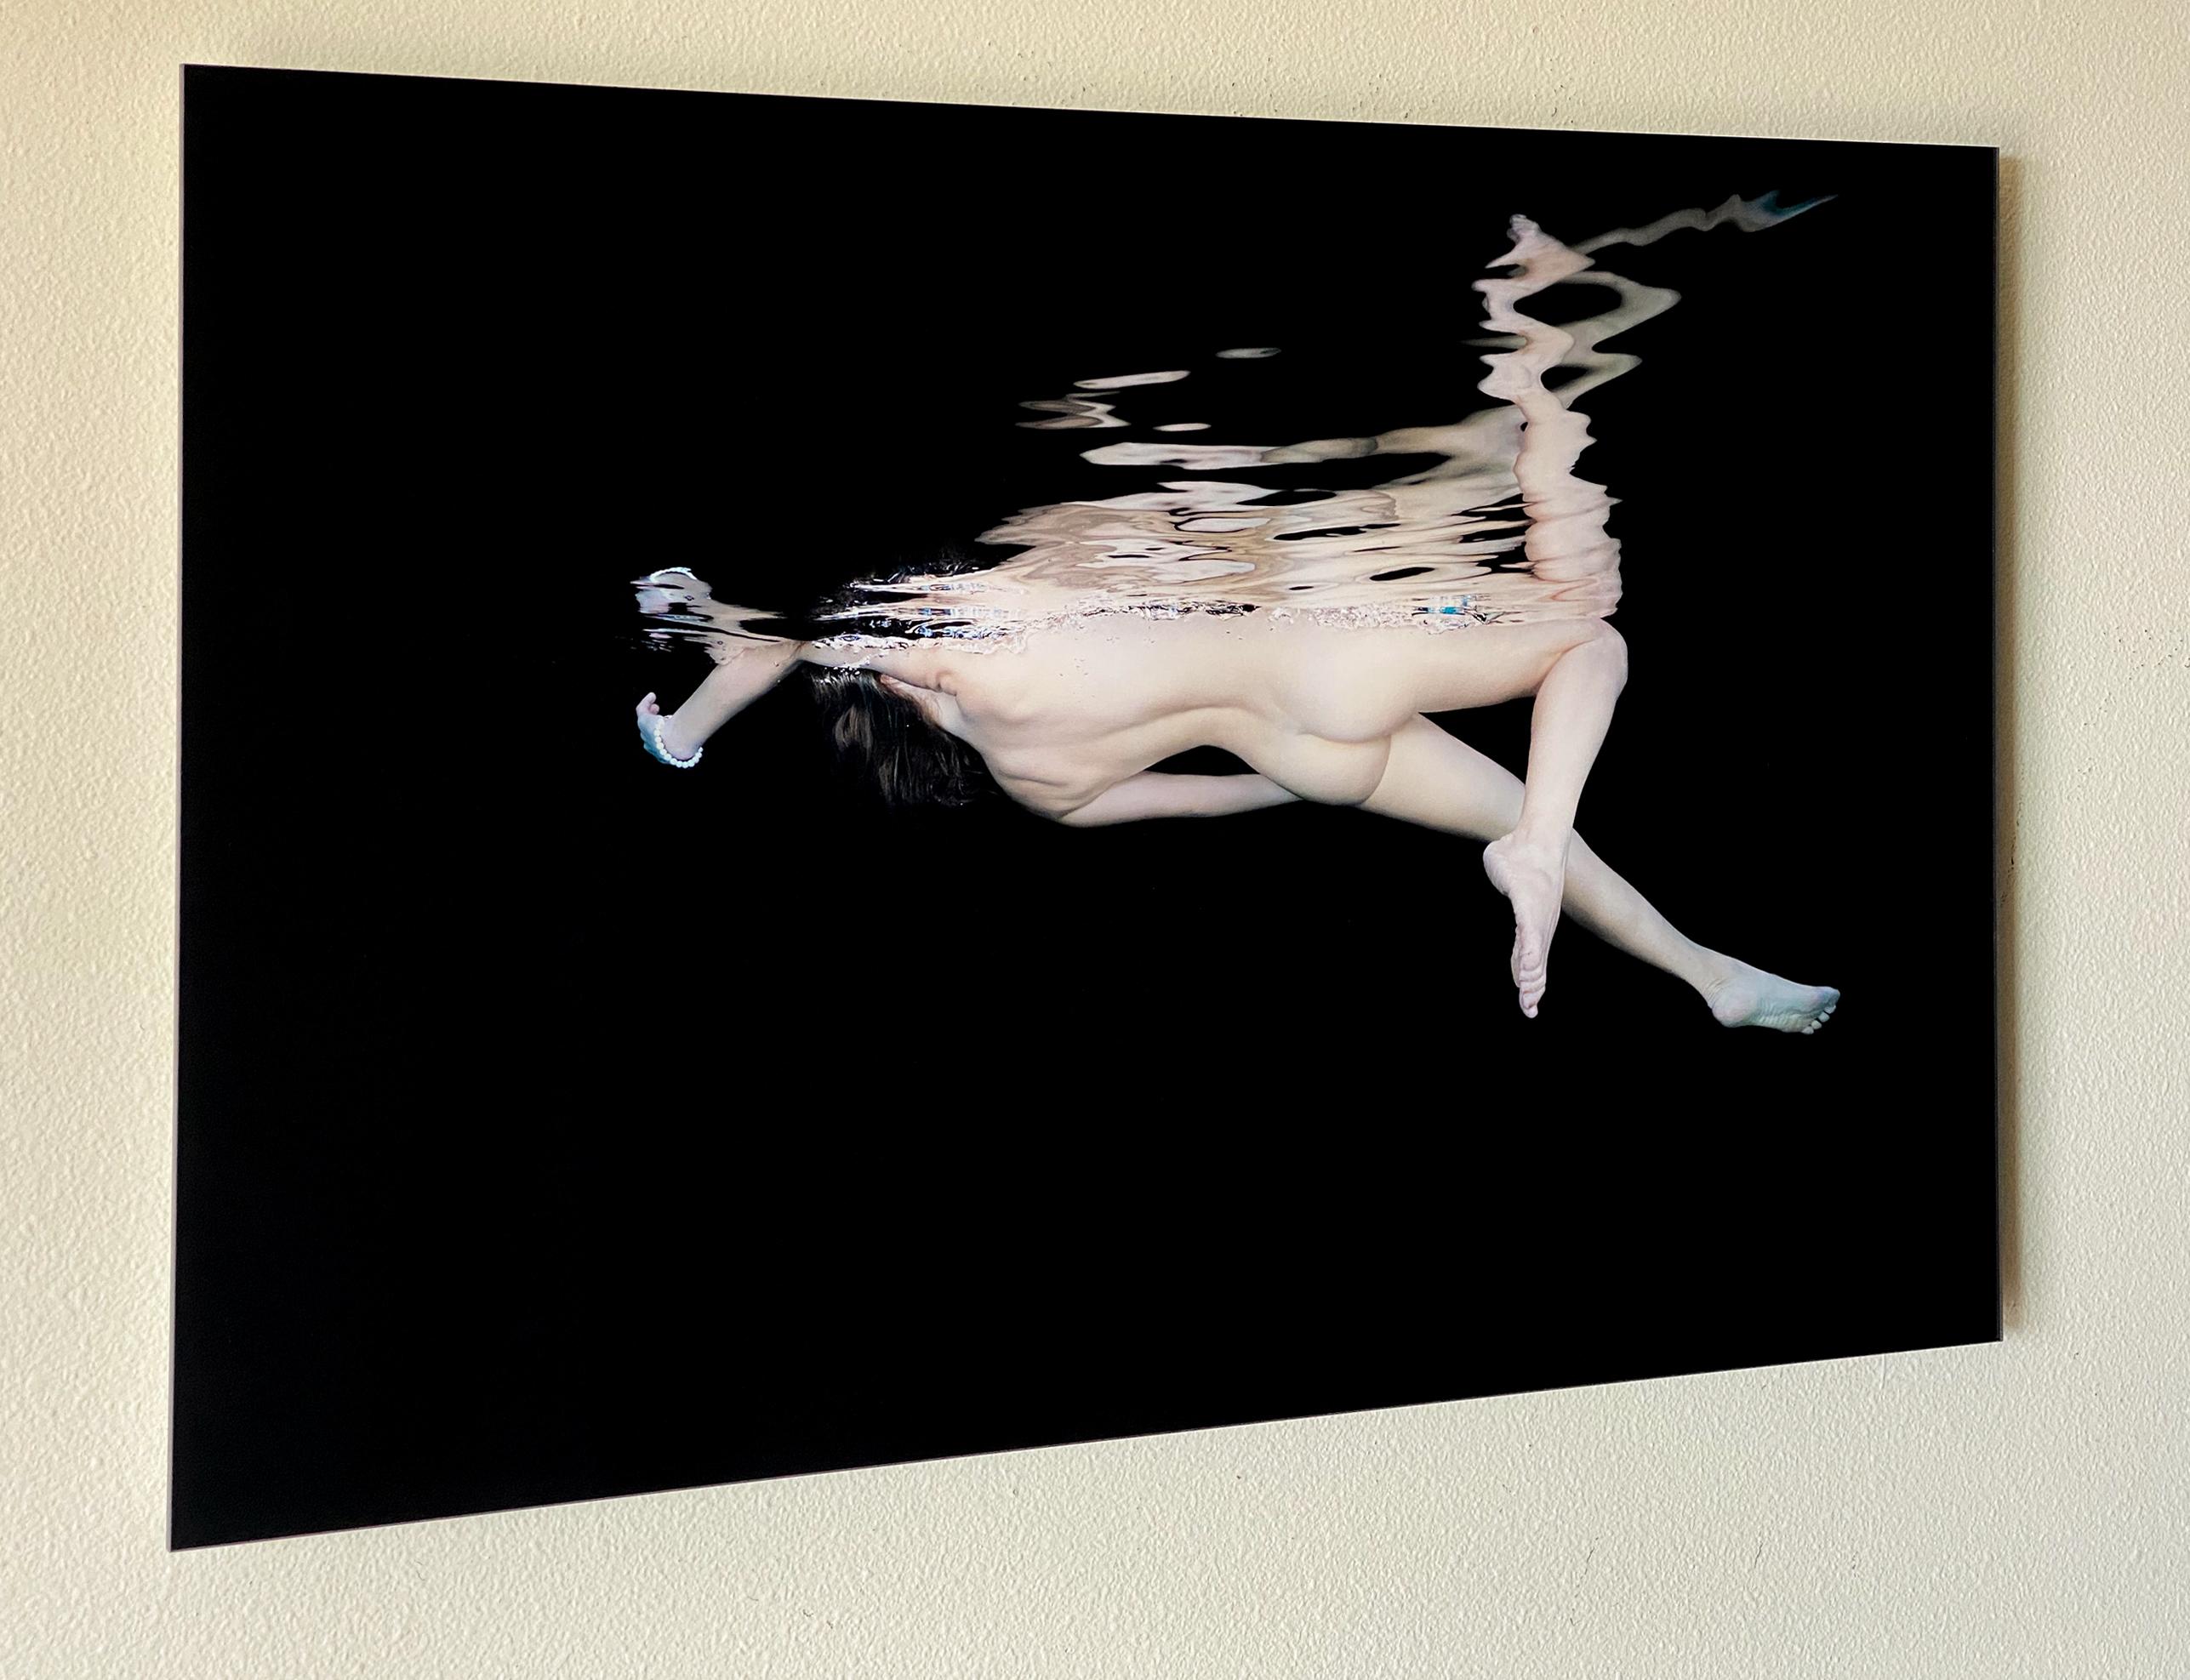 Porcelain II  - underwater nude photograph - acrylic print 24x36